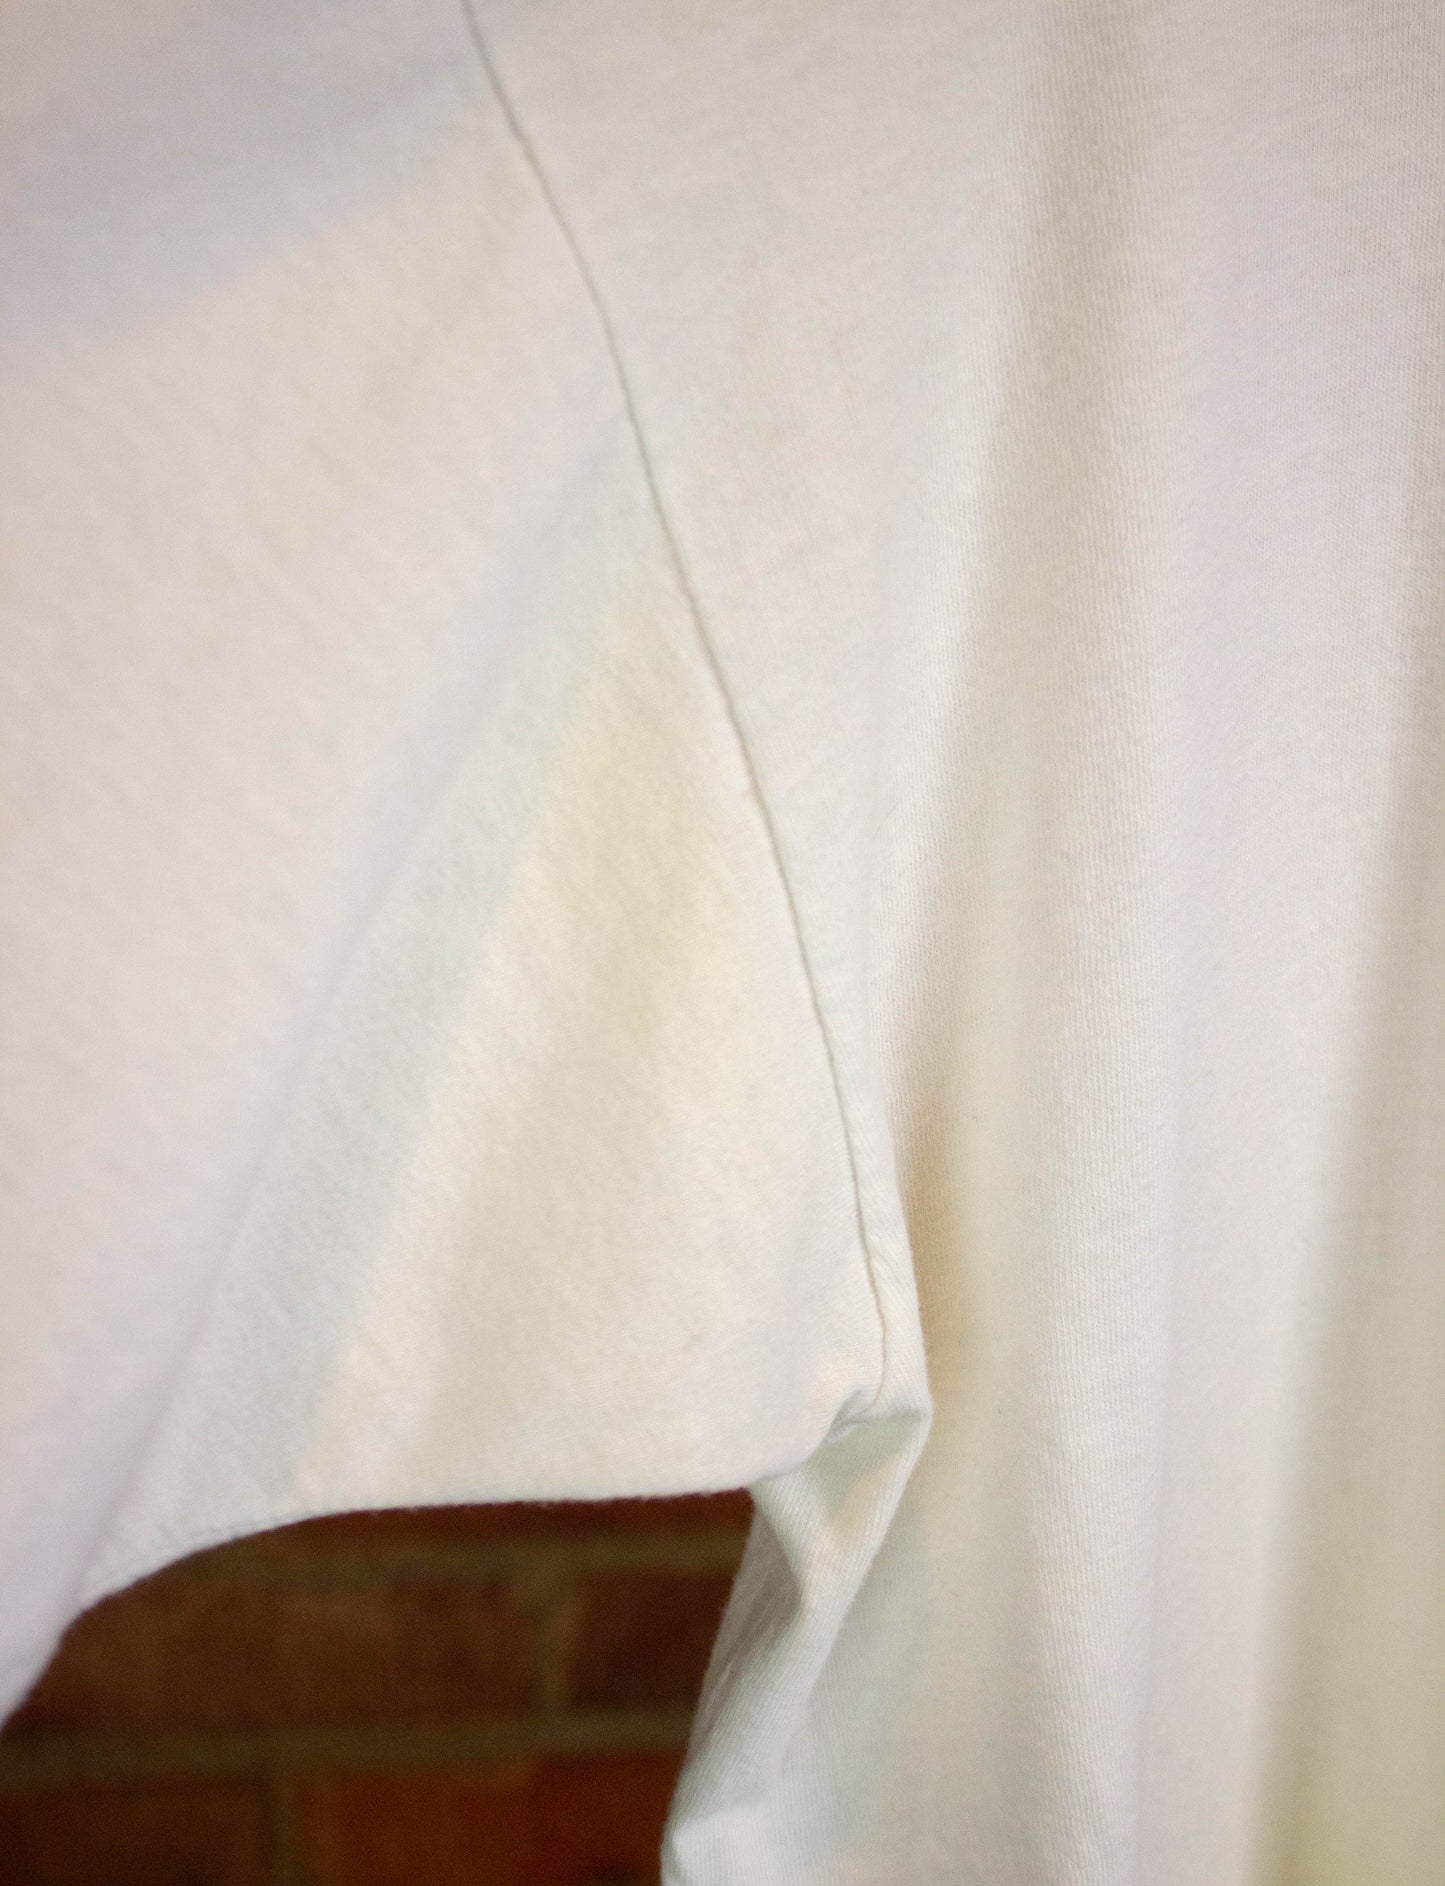 Vintage Peter Criss 1994-95 Full Metal Jacket Tour Concert T Shirt White XL